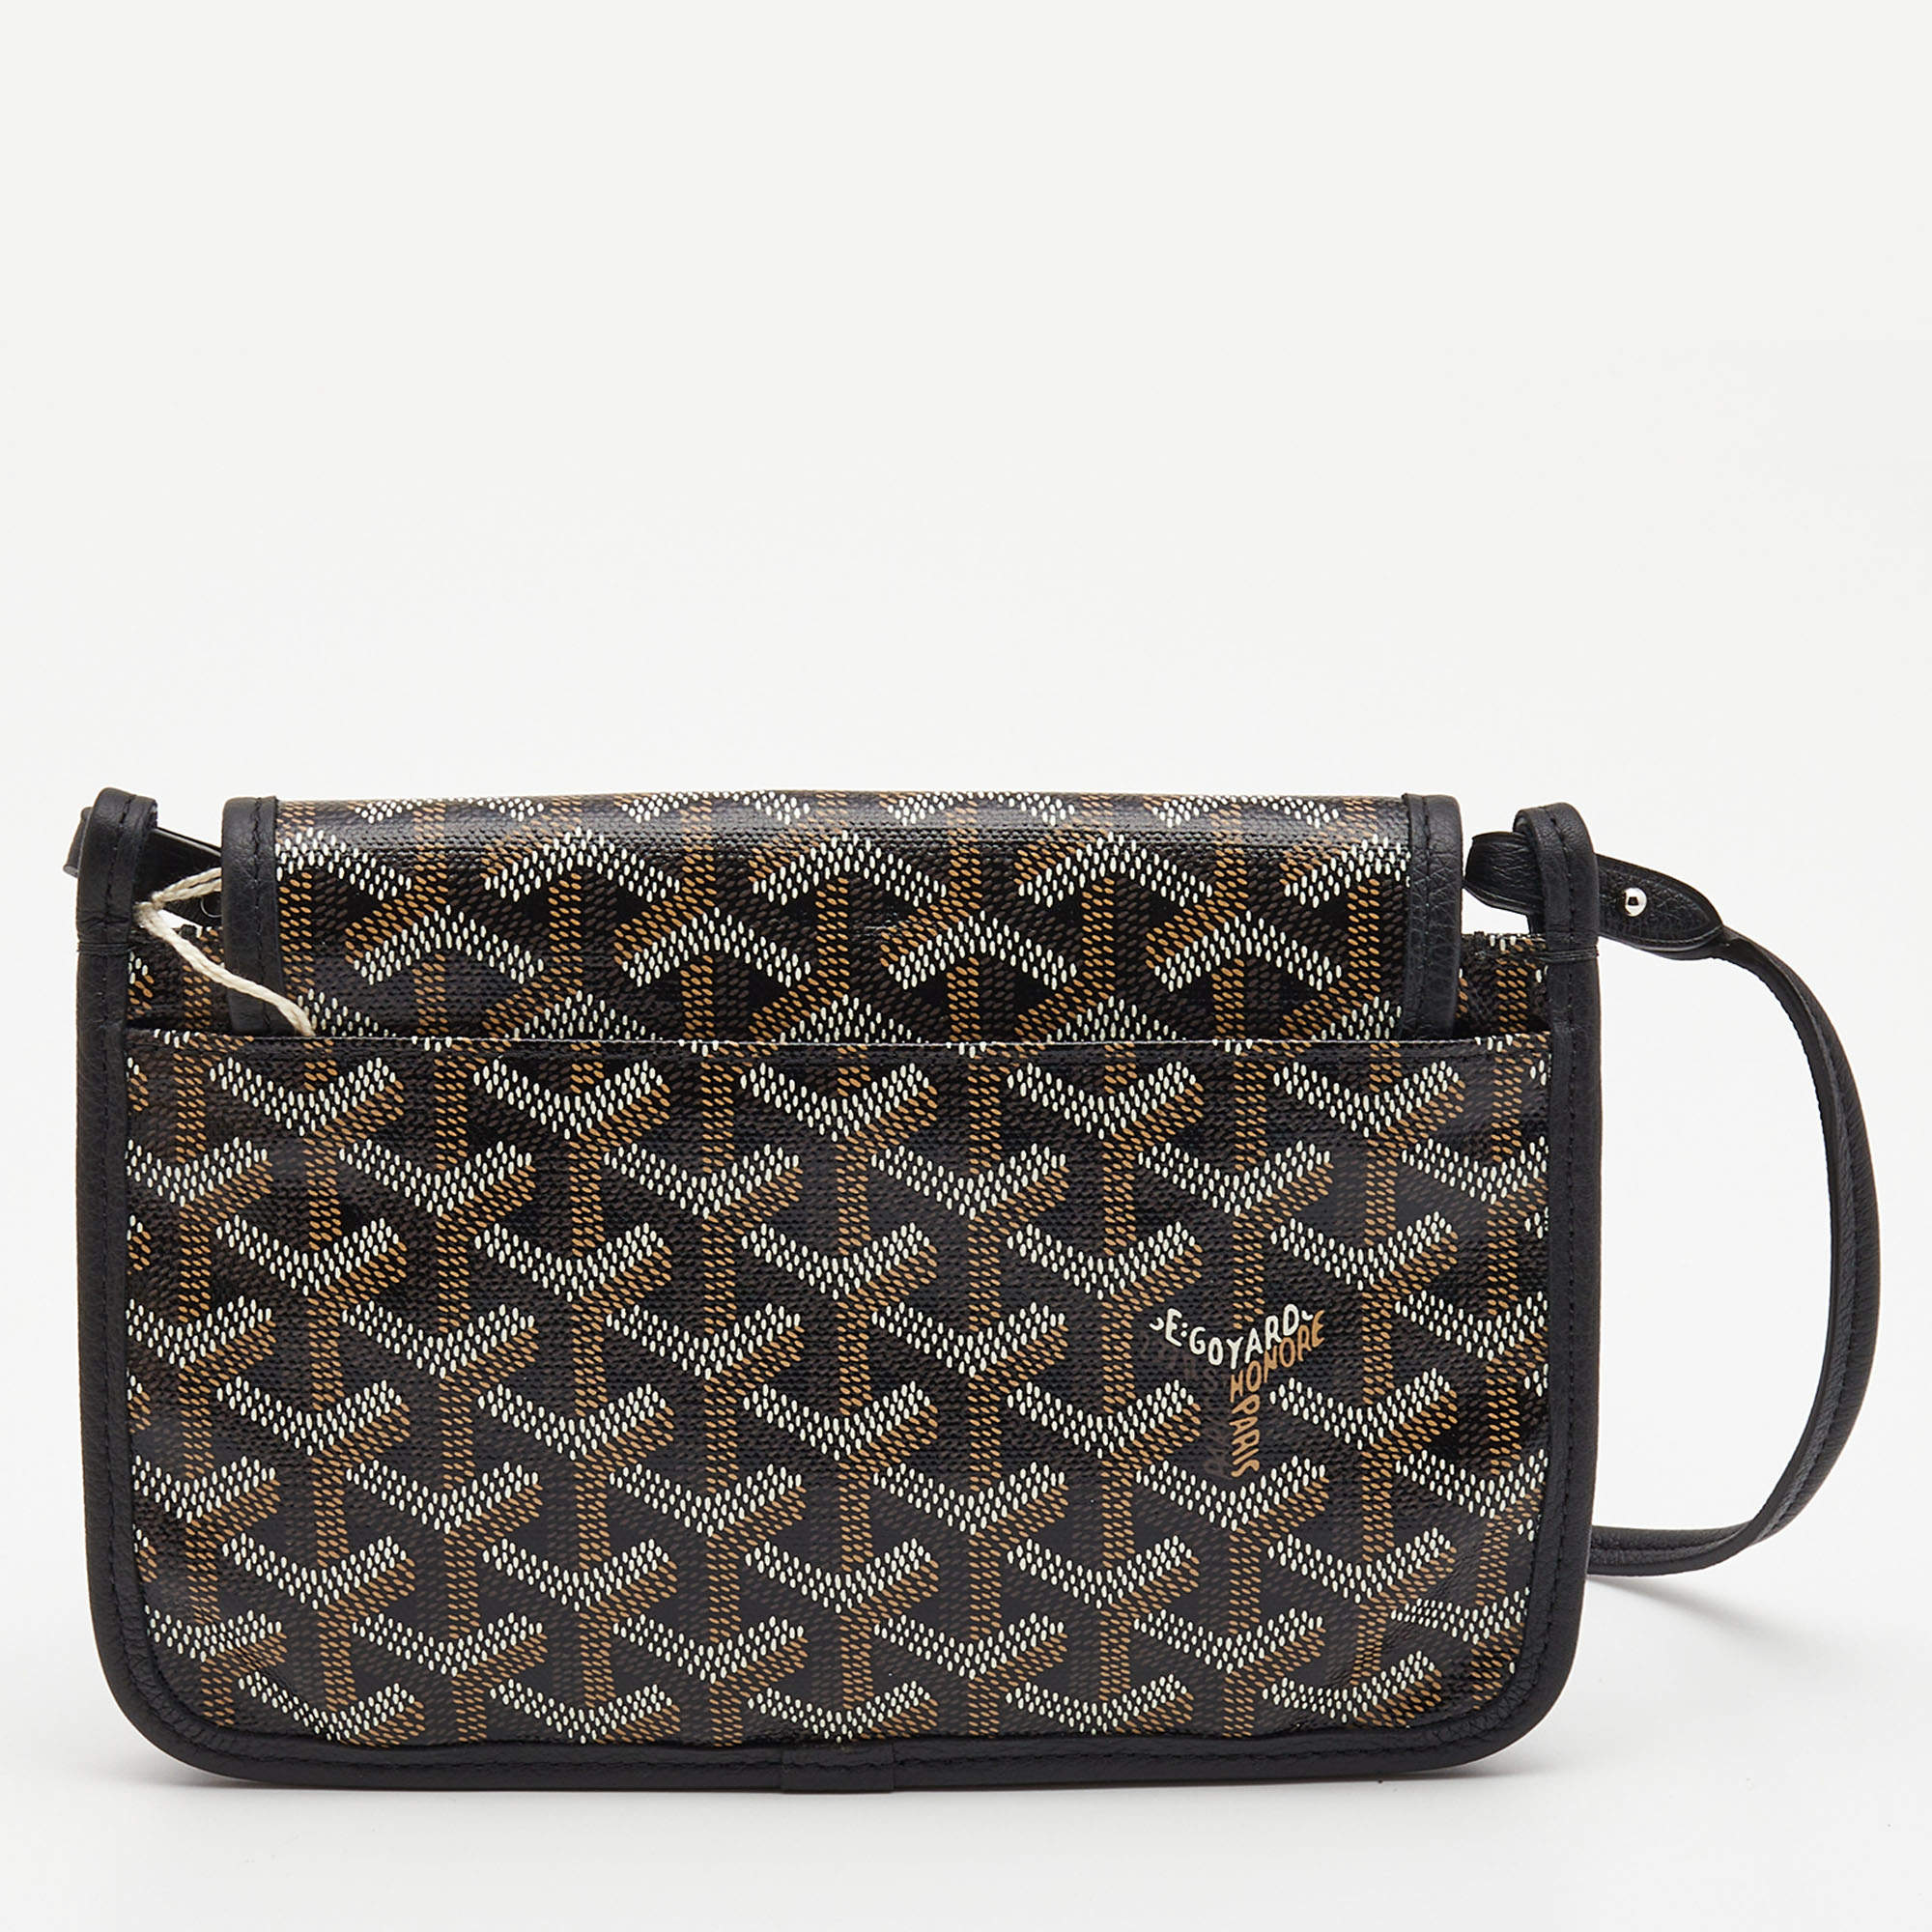 Goyard Goyardine Plumet - Burgundy Crossbody Bags, Handbags - GOY38065